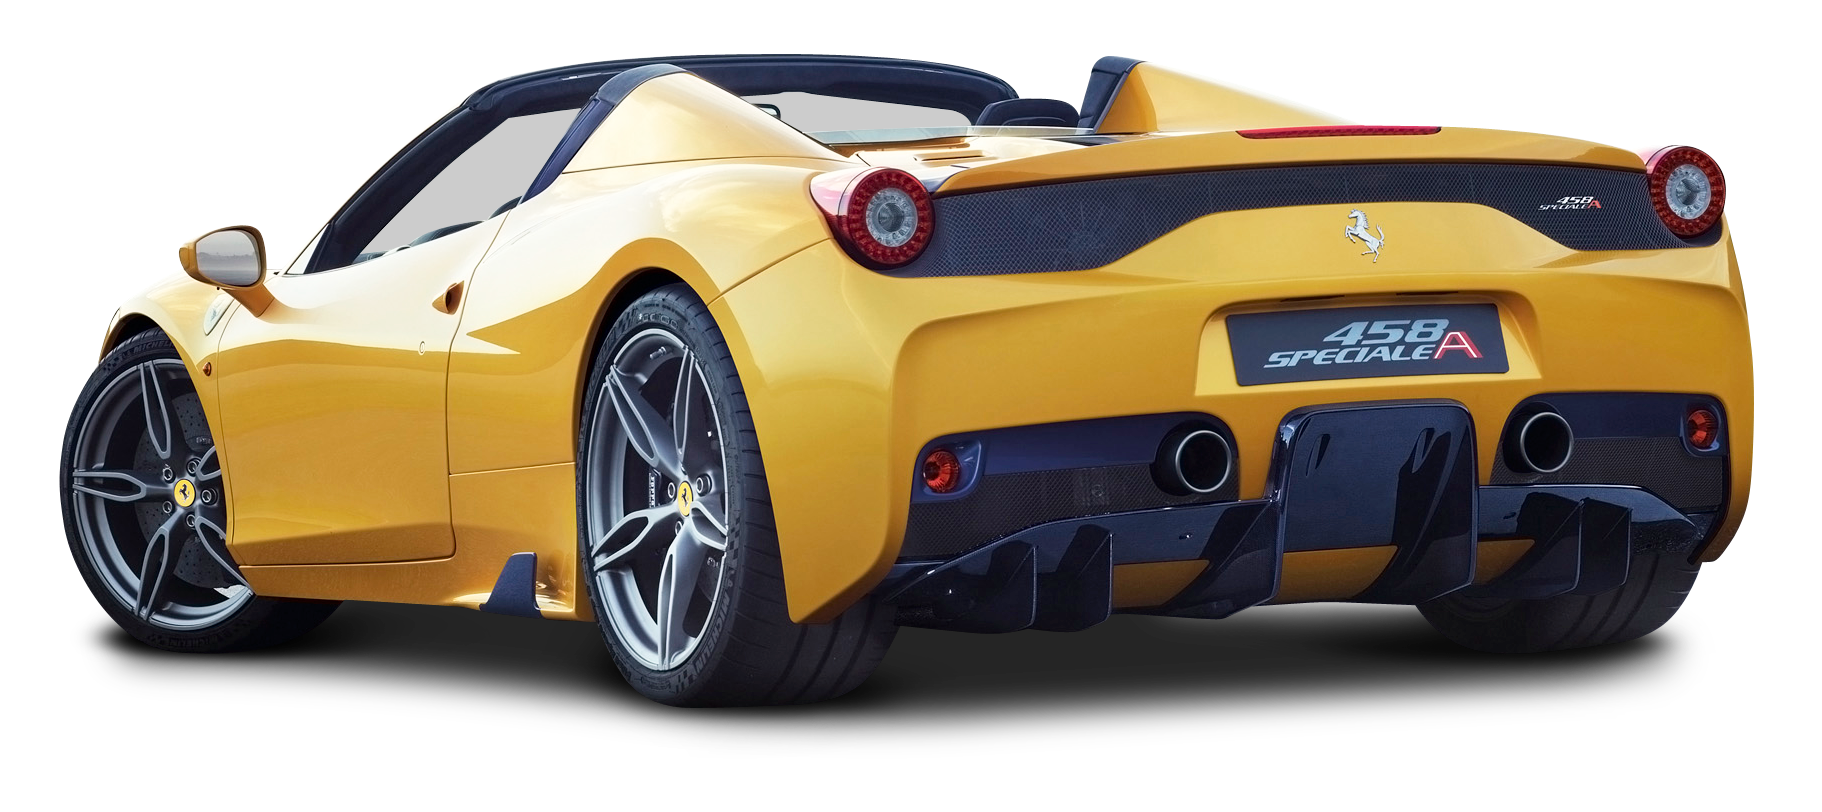 Ferrari 458 Speciale Aperta Yellow Car